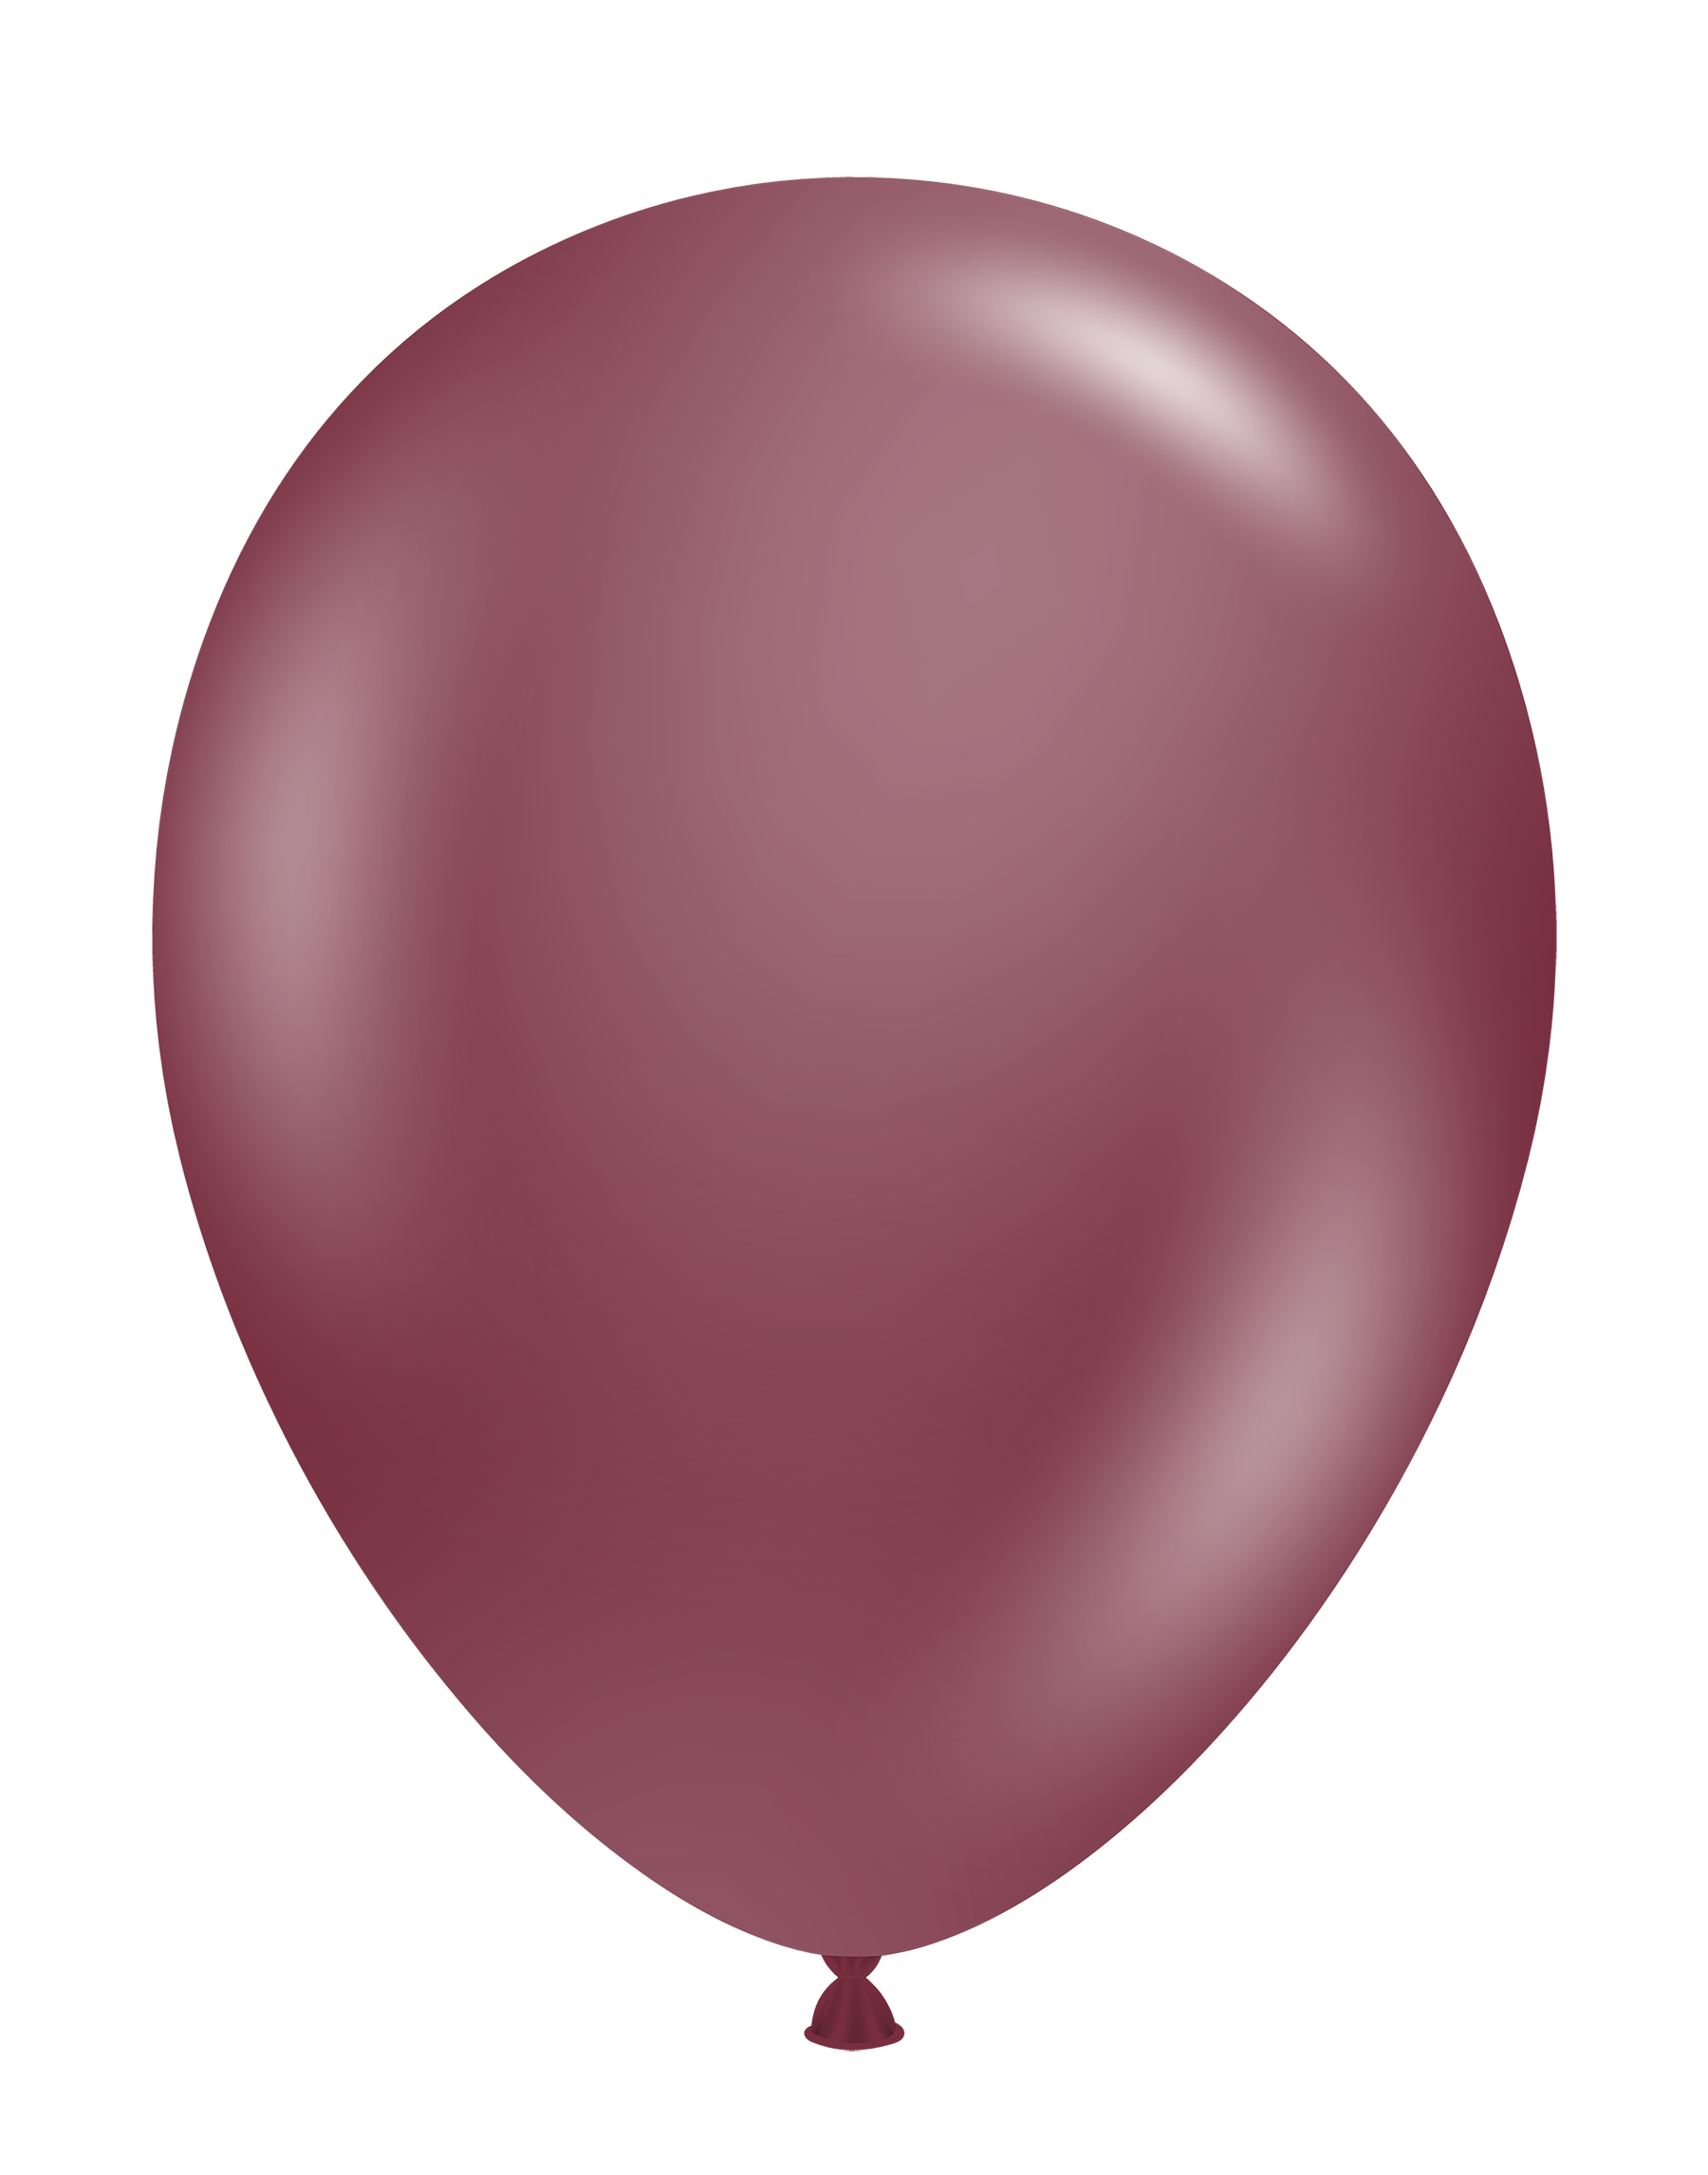 17" TUFTEX Samba - Burgundy Latex Balloons | 50 Count